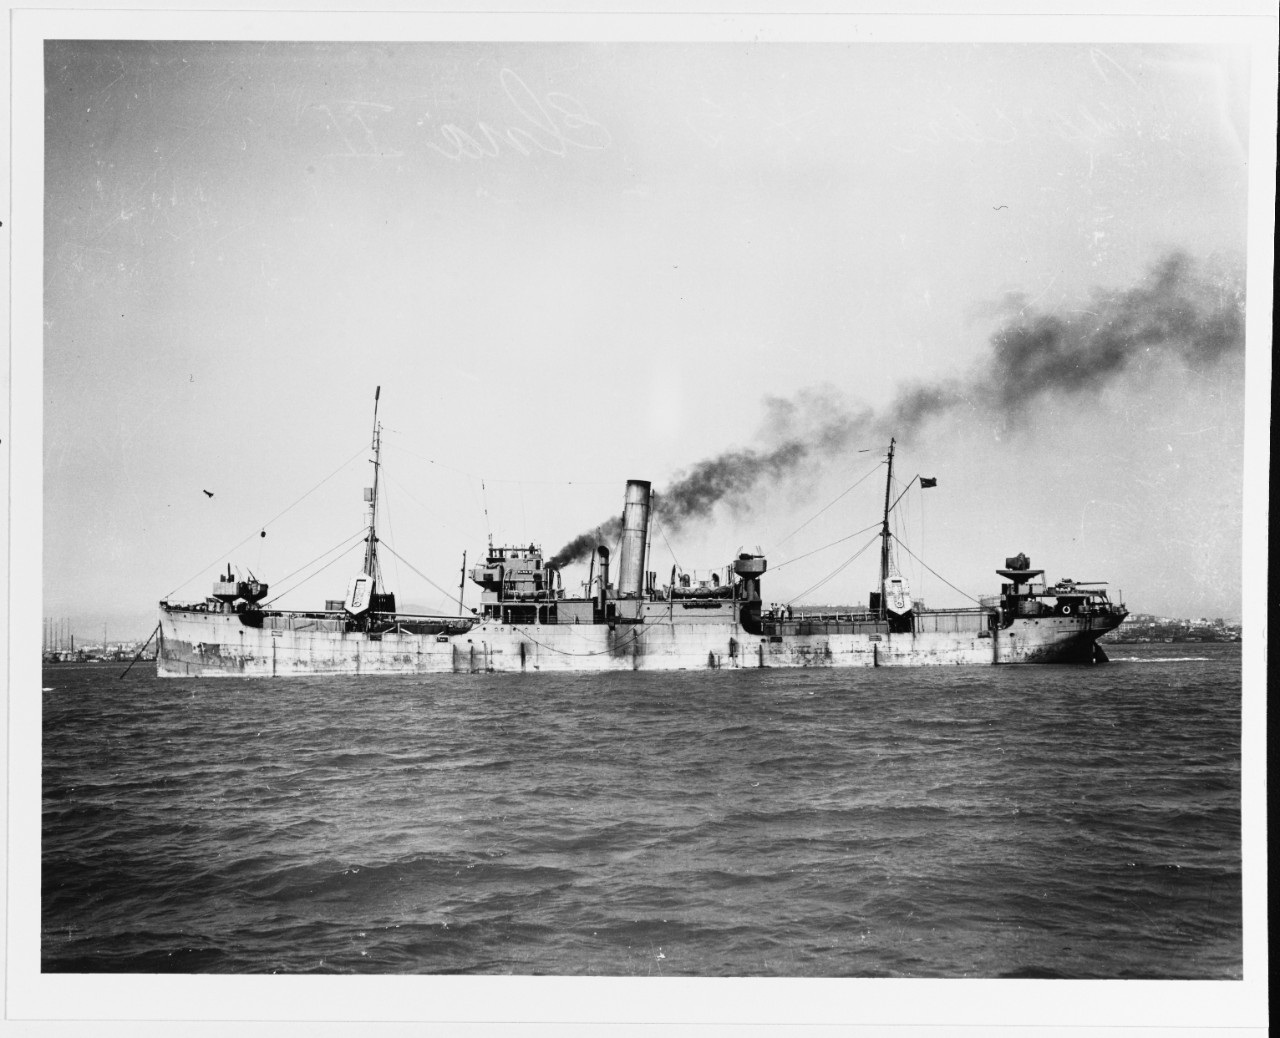 S.S. ELNA II (U.S.S.R. Merchant Cargo Ship, 1903-1950?)